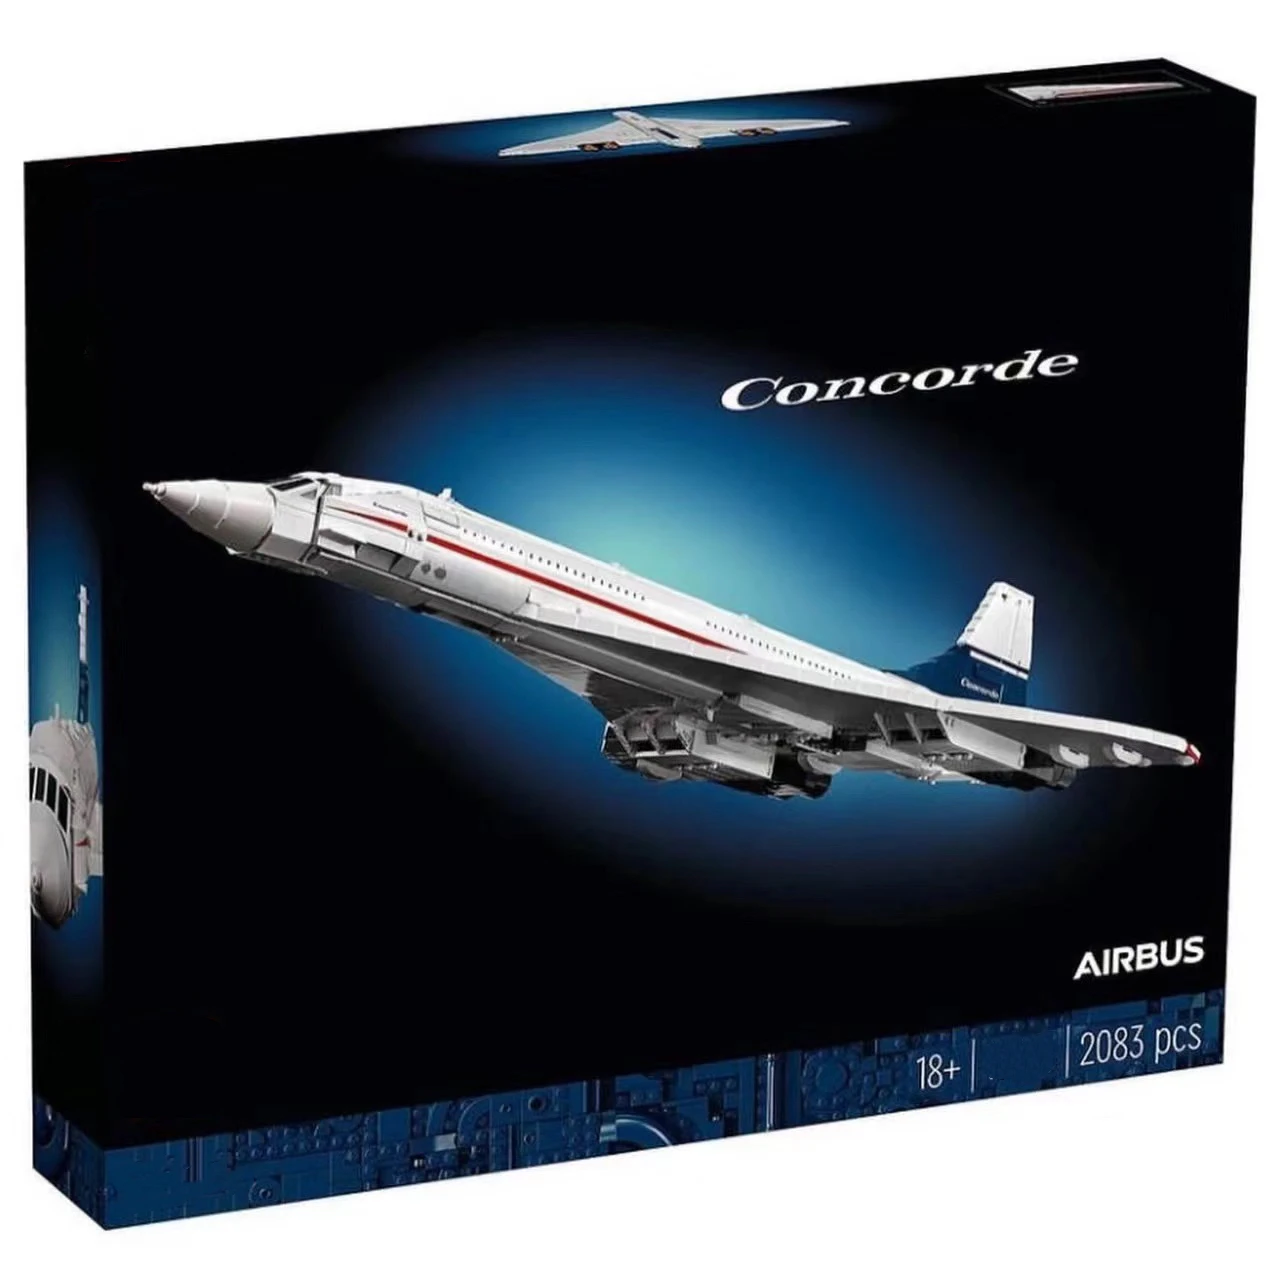 

MOC 1:60 Large Concorde 10318 Building Blocks Supersonic Flight Passenger Plane Model Educational Toys for Children Boy Gifts